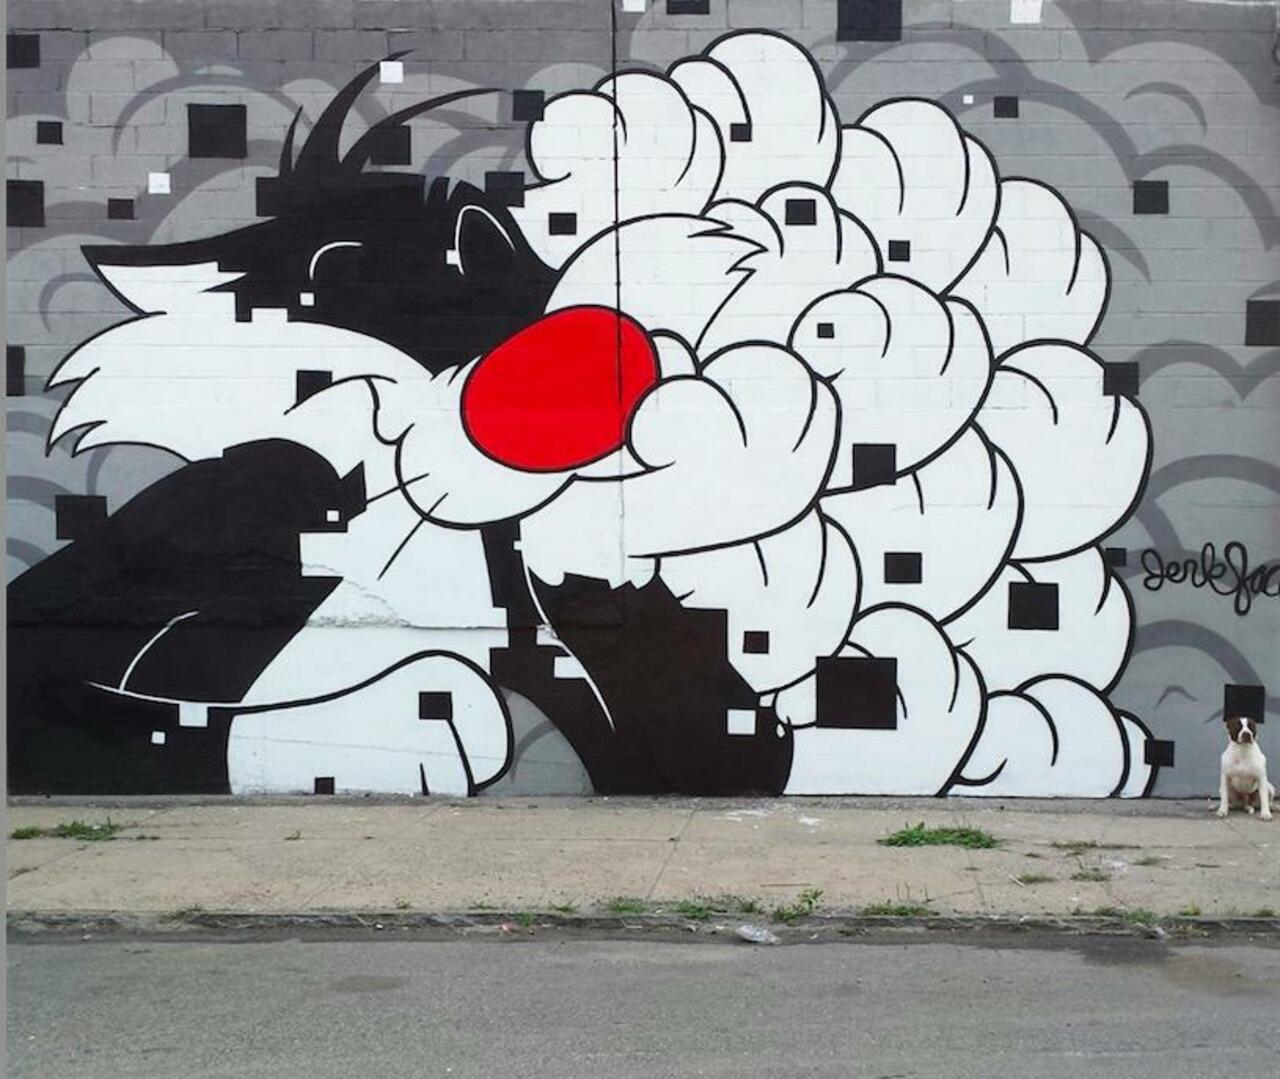 Jerkface 
#streetart #art #graffiti #mural #urbanart http://t.co/3gahLWuLWF